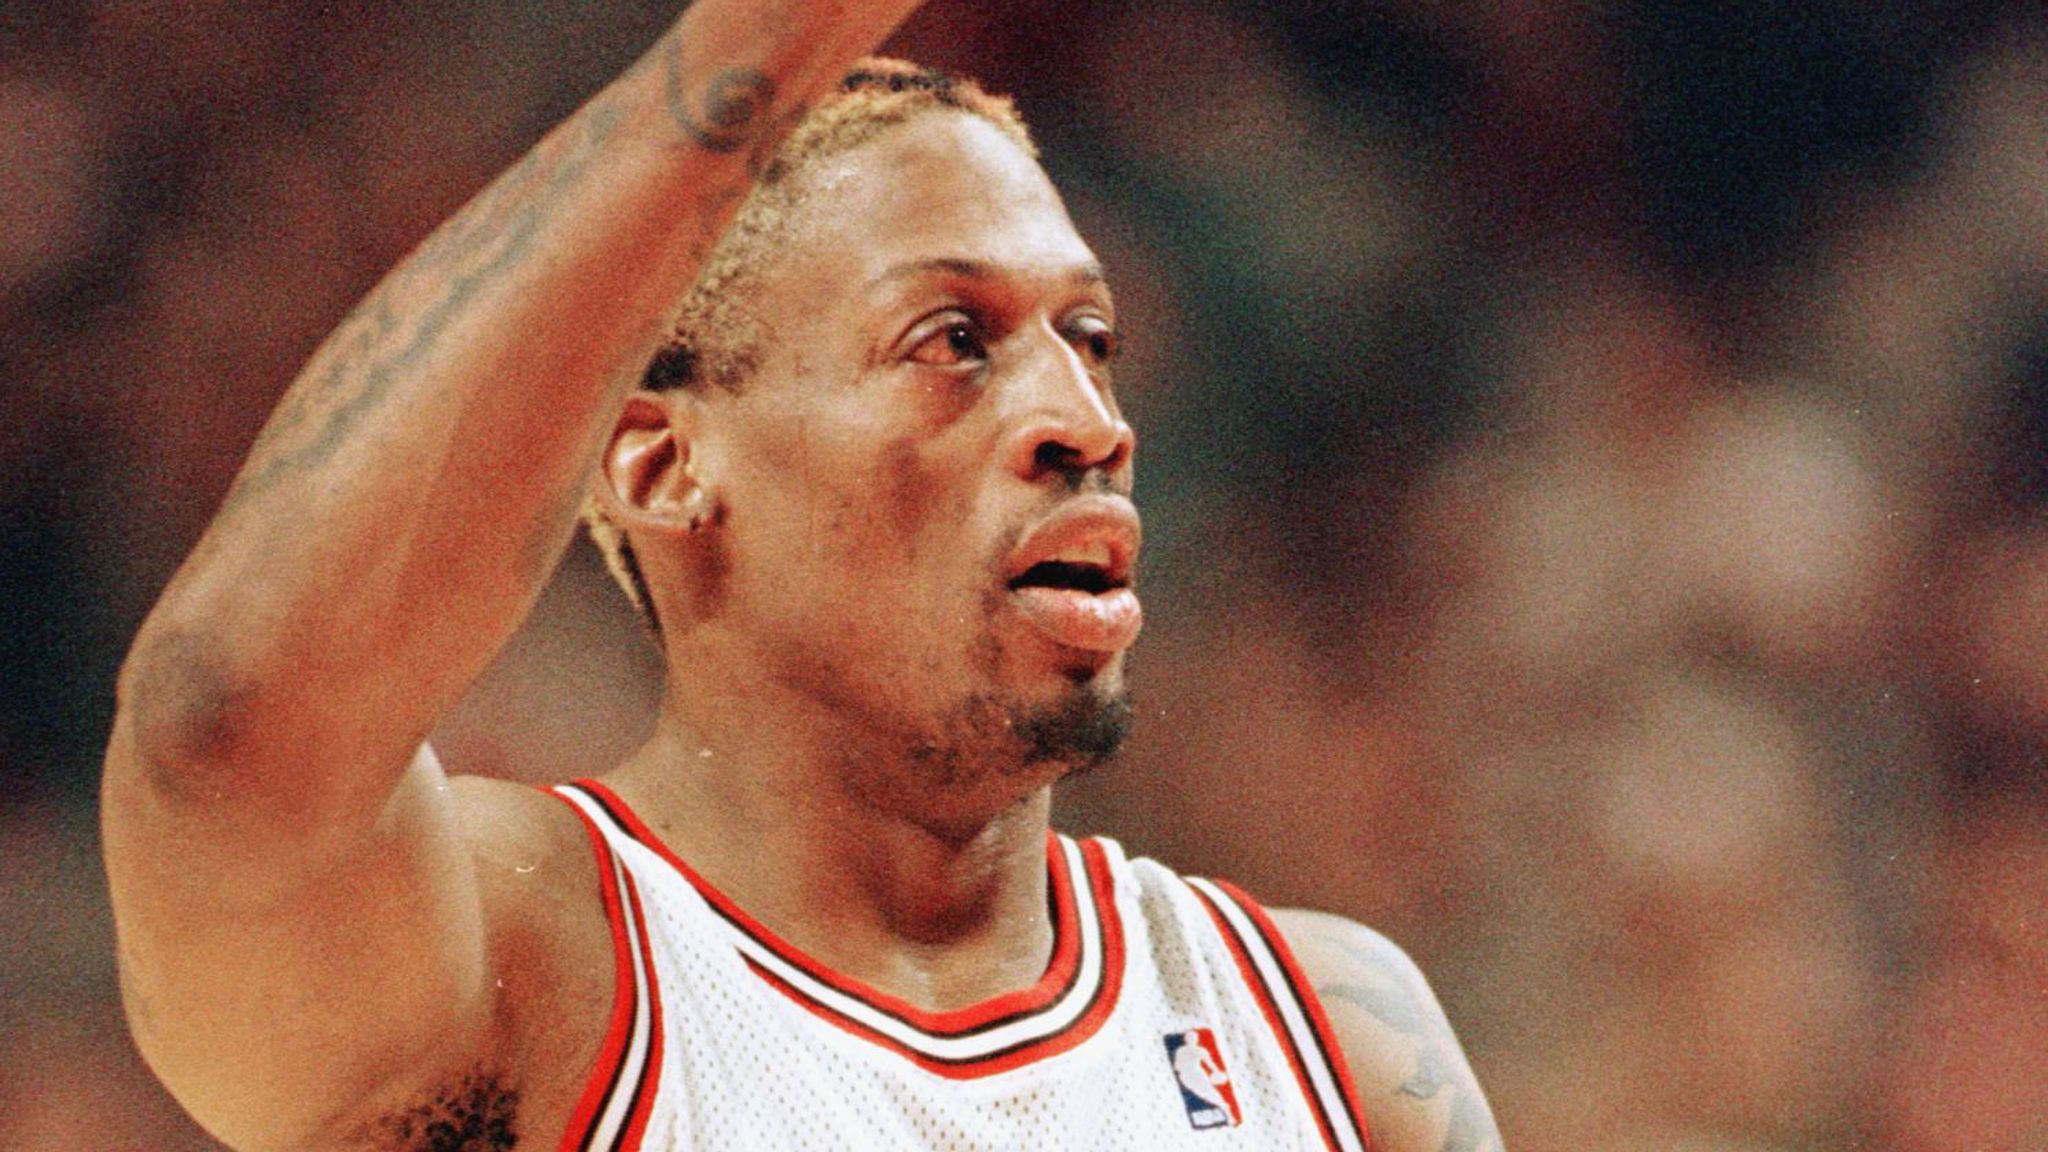 Last Dance' Episode 3: How Dennis Rodman joined Chicago Bulls